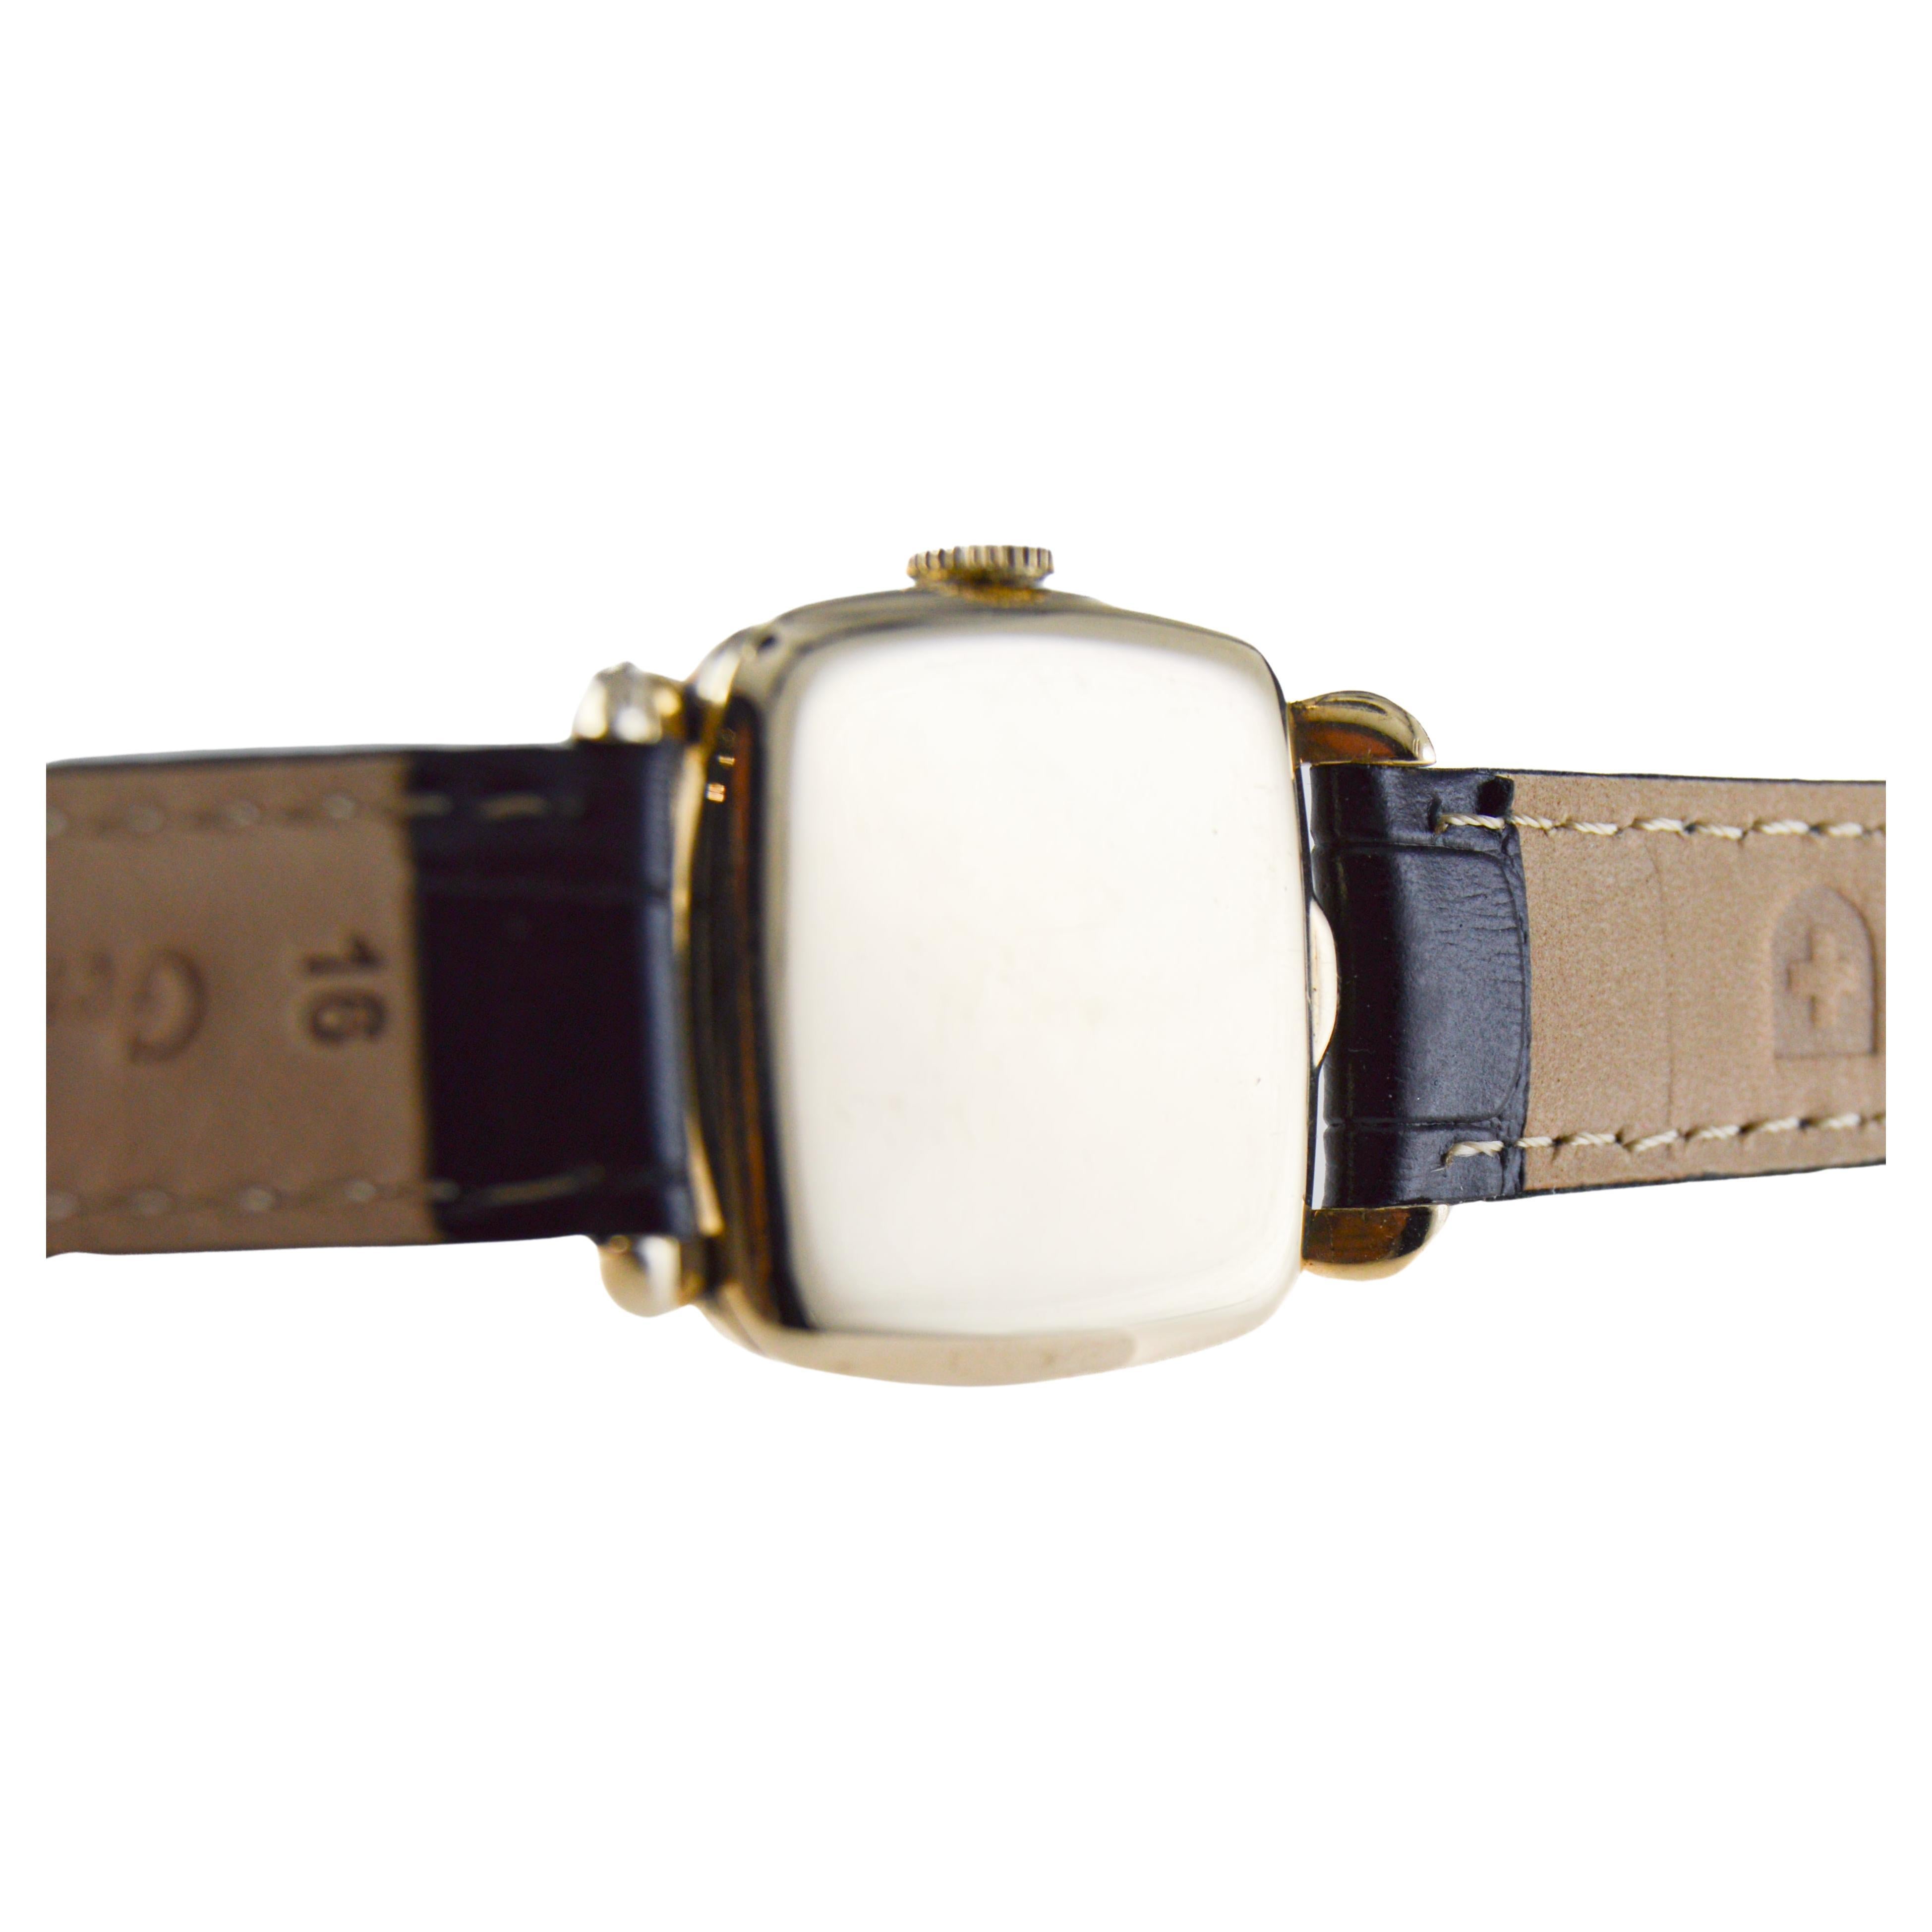 Waltham 14k Art Deco Cushion Shaped Watch with Original Rare Black Dial For Sale 3